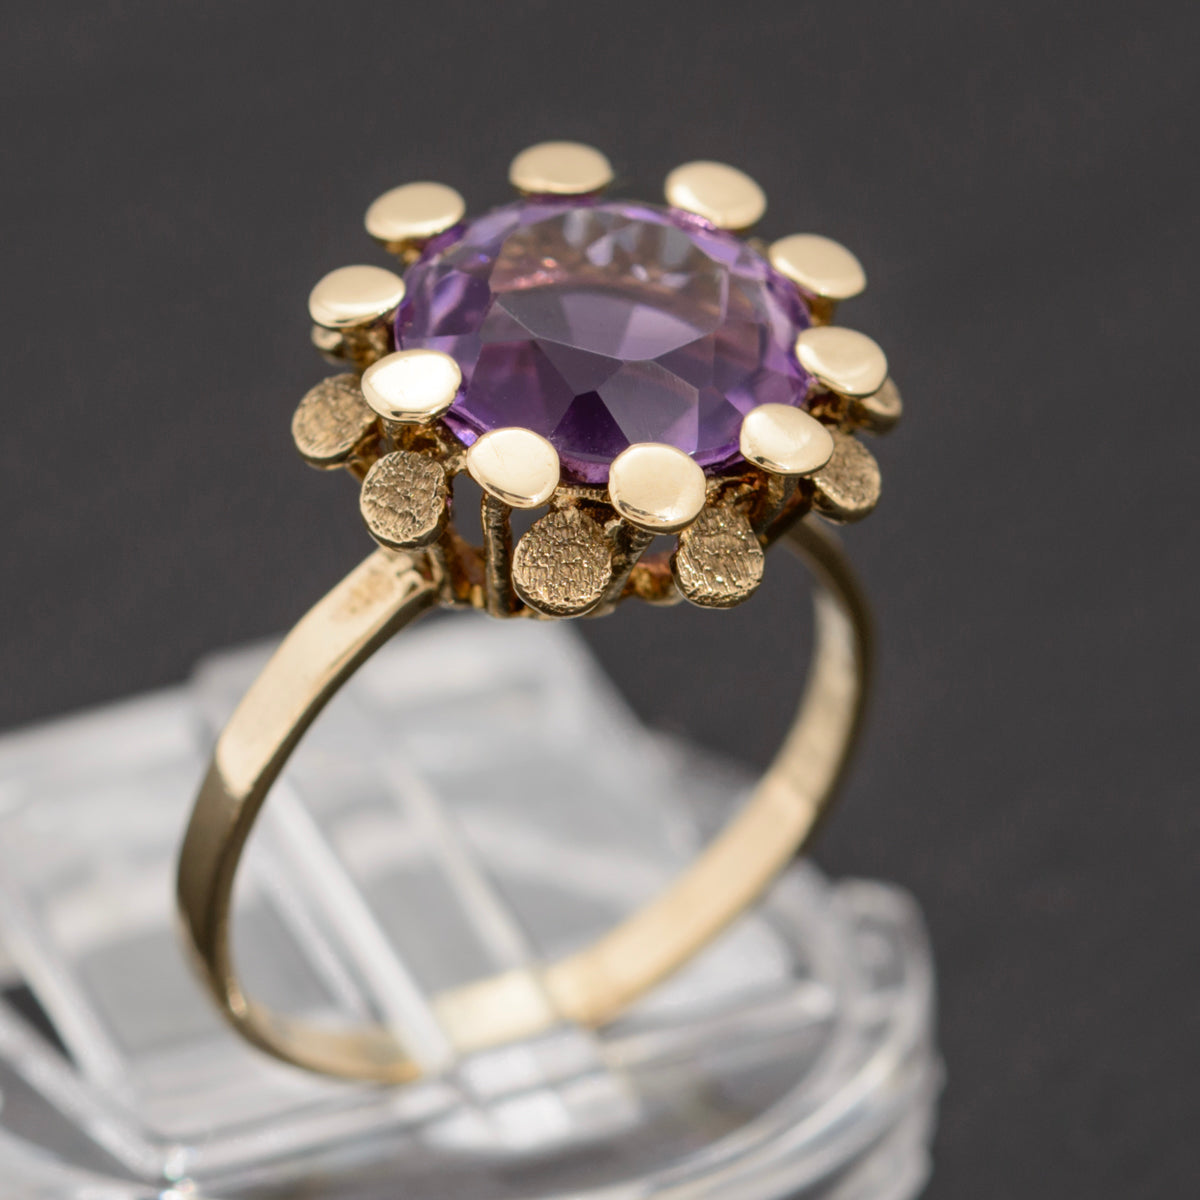 Vintage Modernist Amethyst Gemstone Ring In 9ct Gold 1970's Retro (A1539)